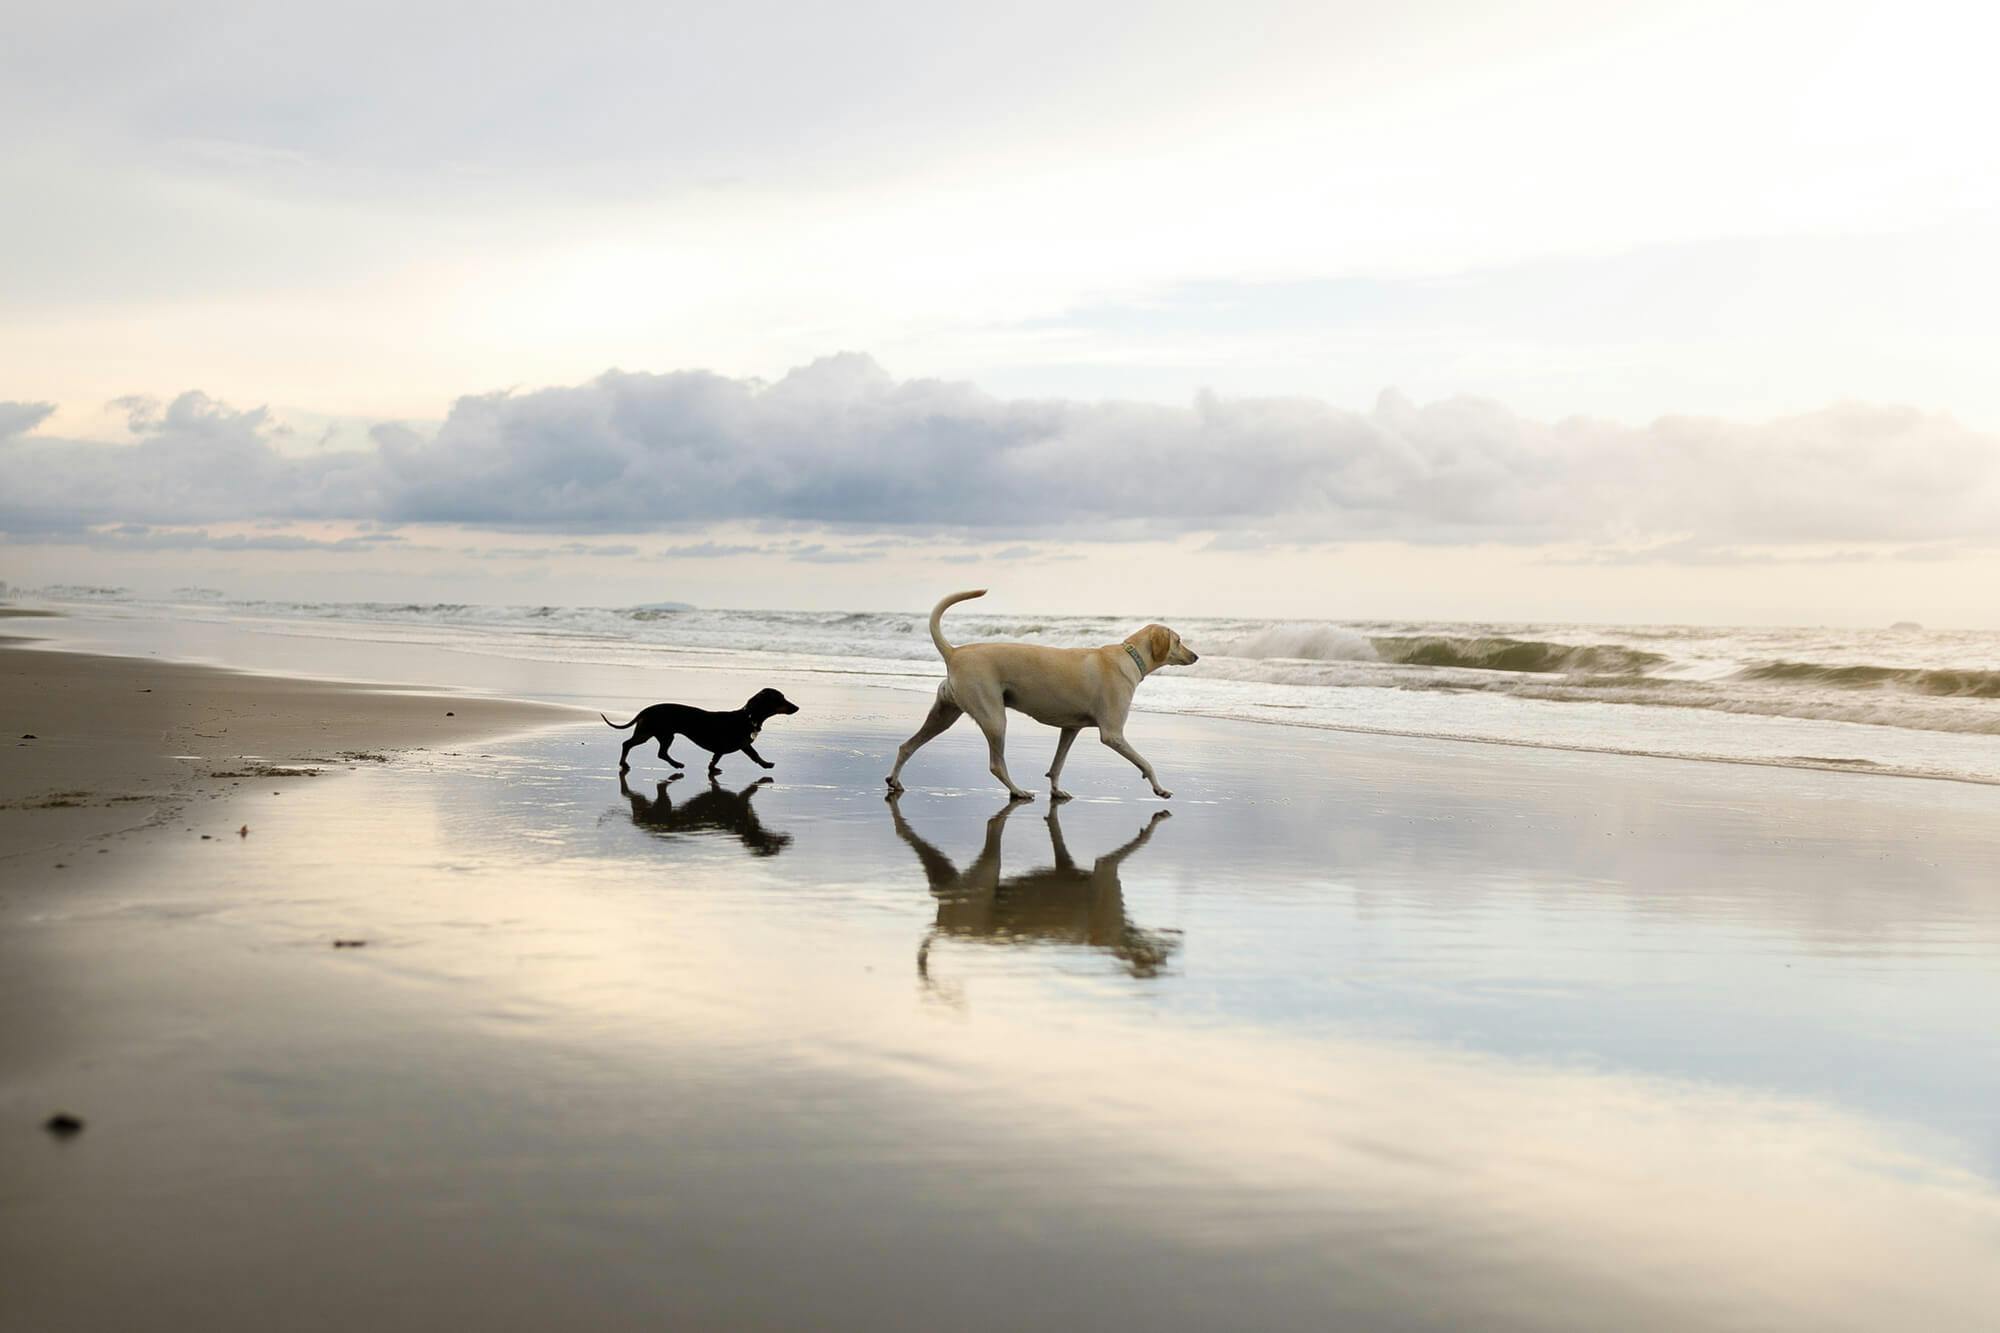 A dachshund and a golden retriever walking along a beach